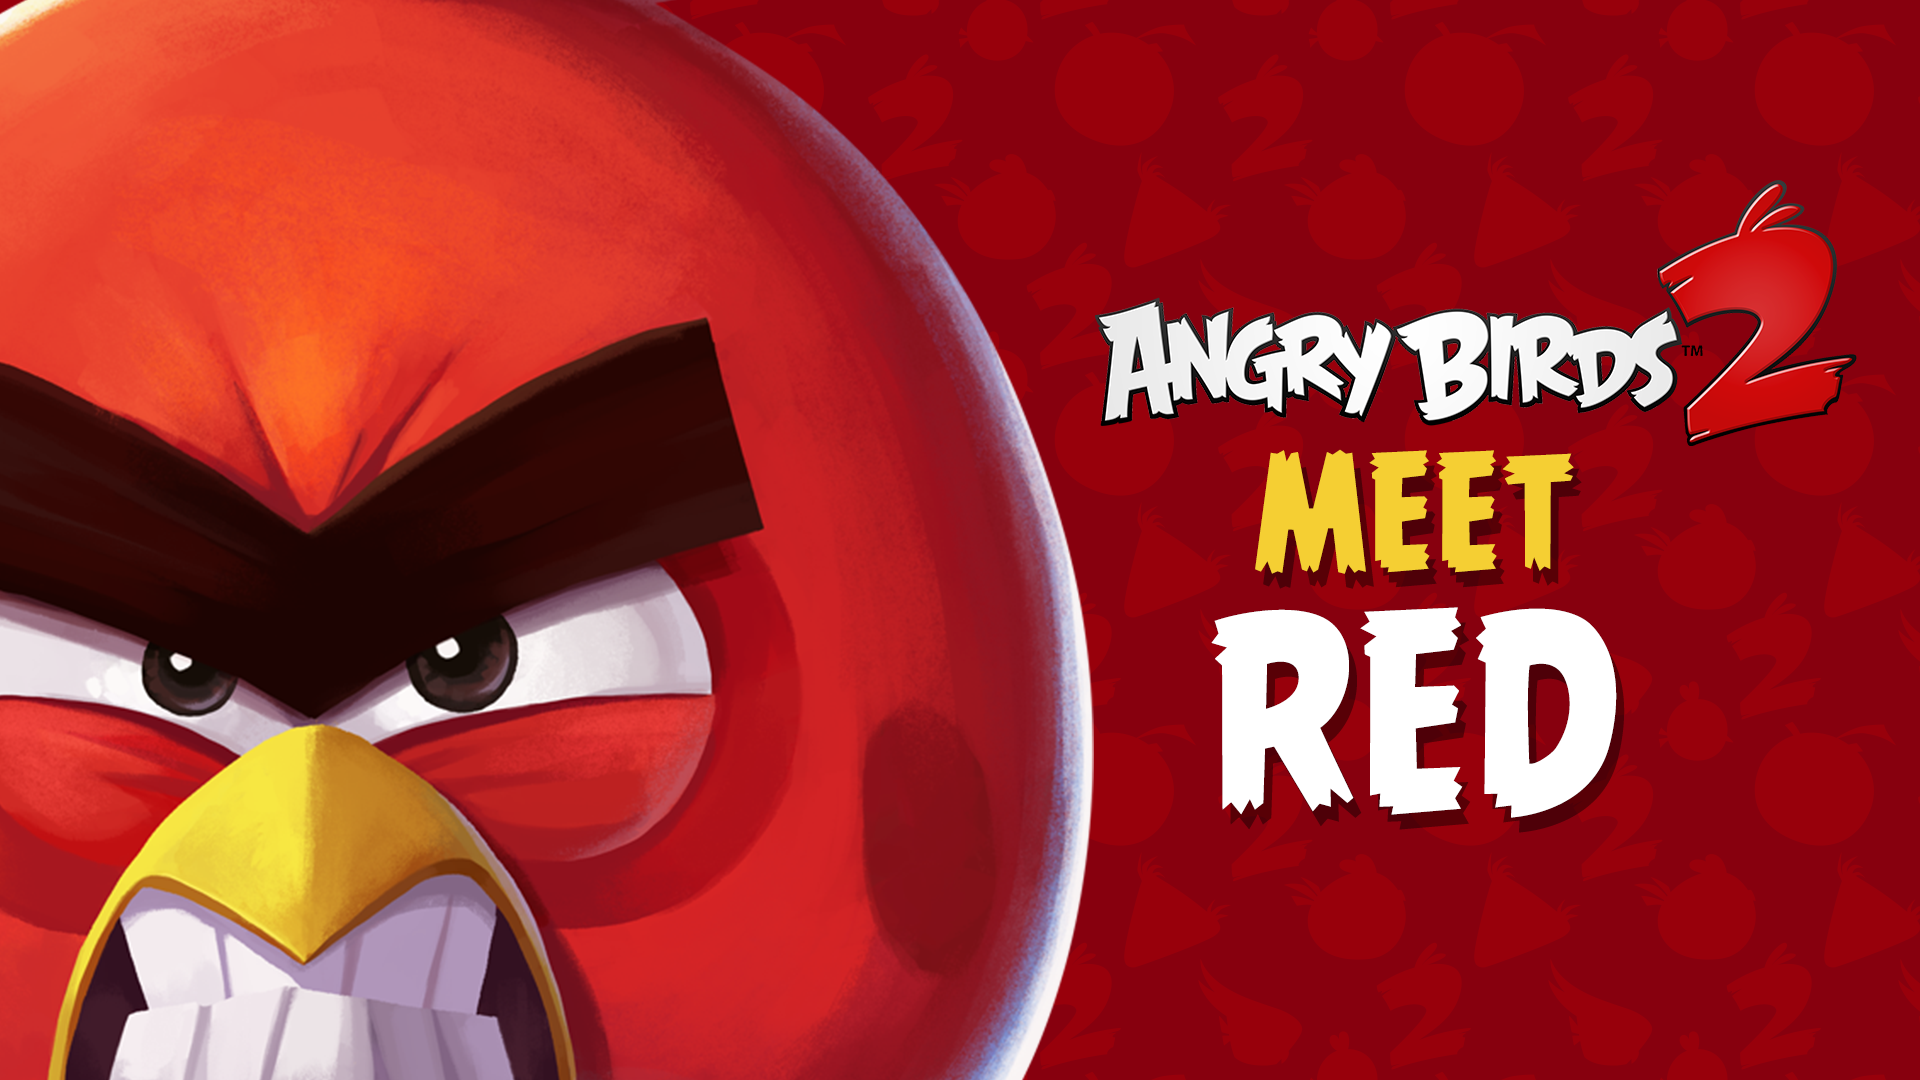 Angry Birds 2 игра. Angry Birds Теренс и ред. Энгри бердз 2 злые птички. Angry Birds 2 Теренс. Песня энгри бердс